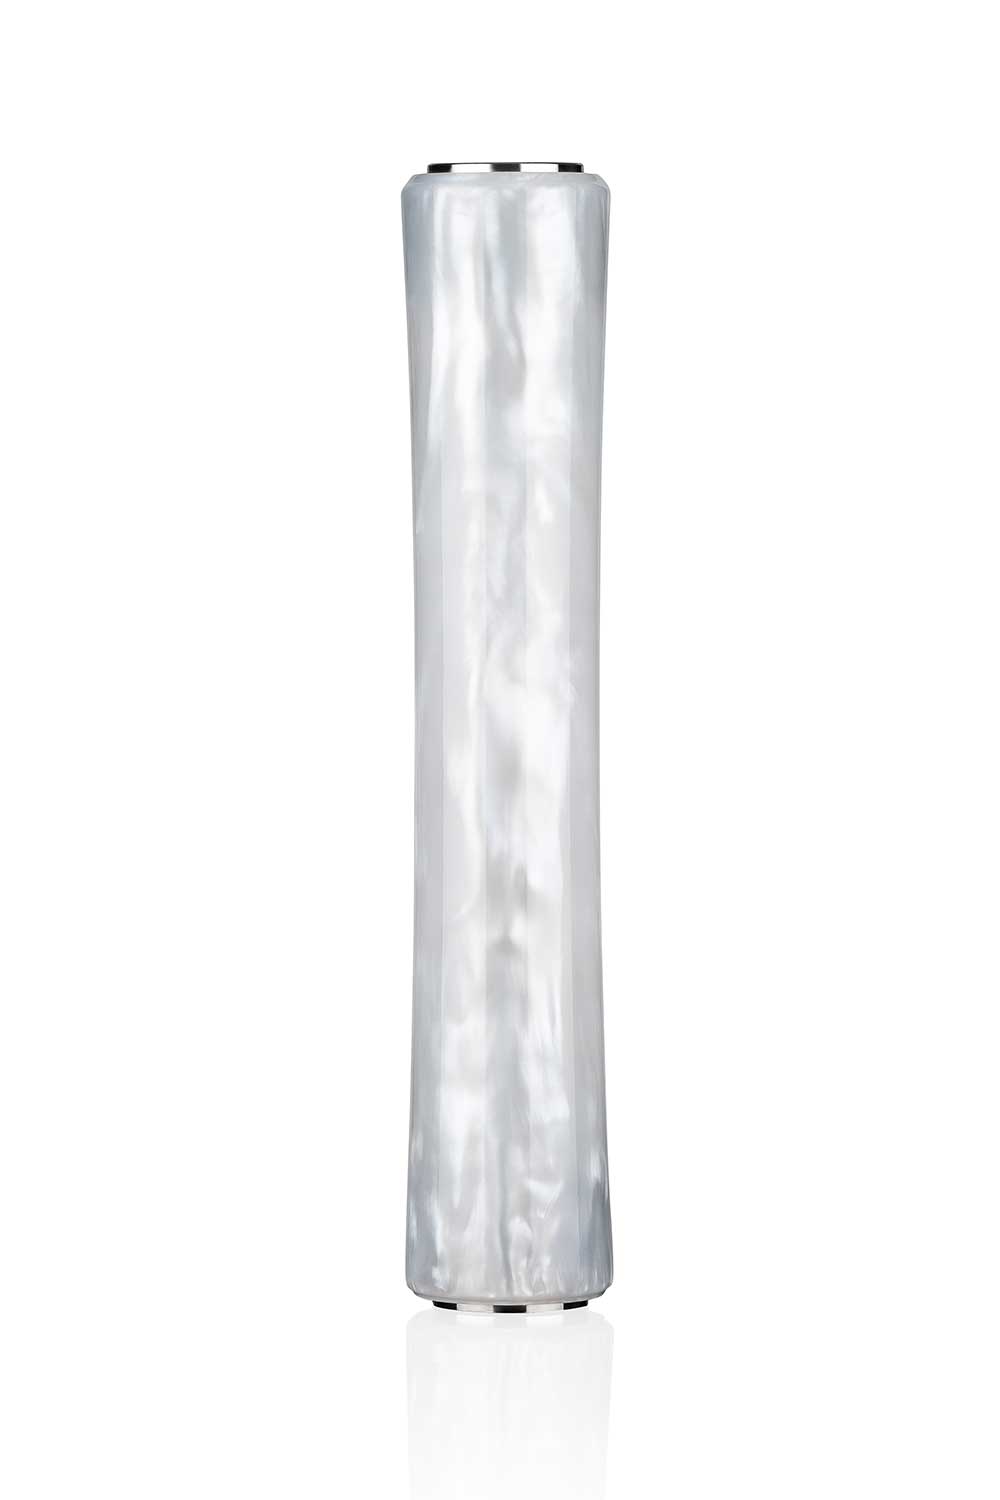 SteamulationPro-X-II-Epoxid-Marble-white-Column-Sleeve-w